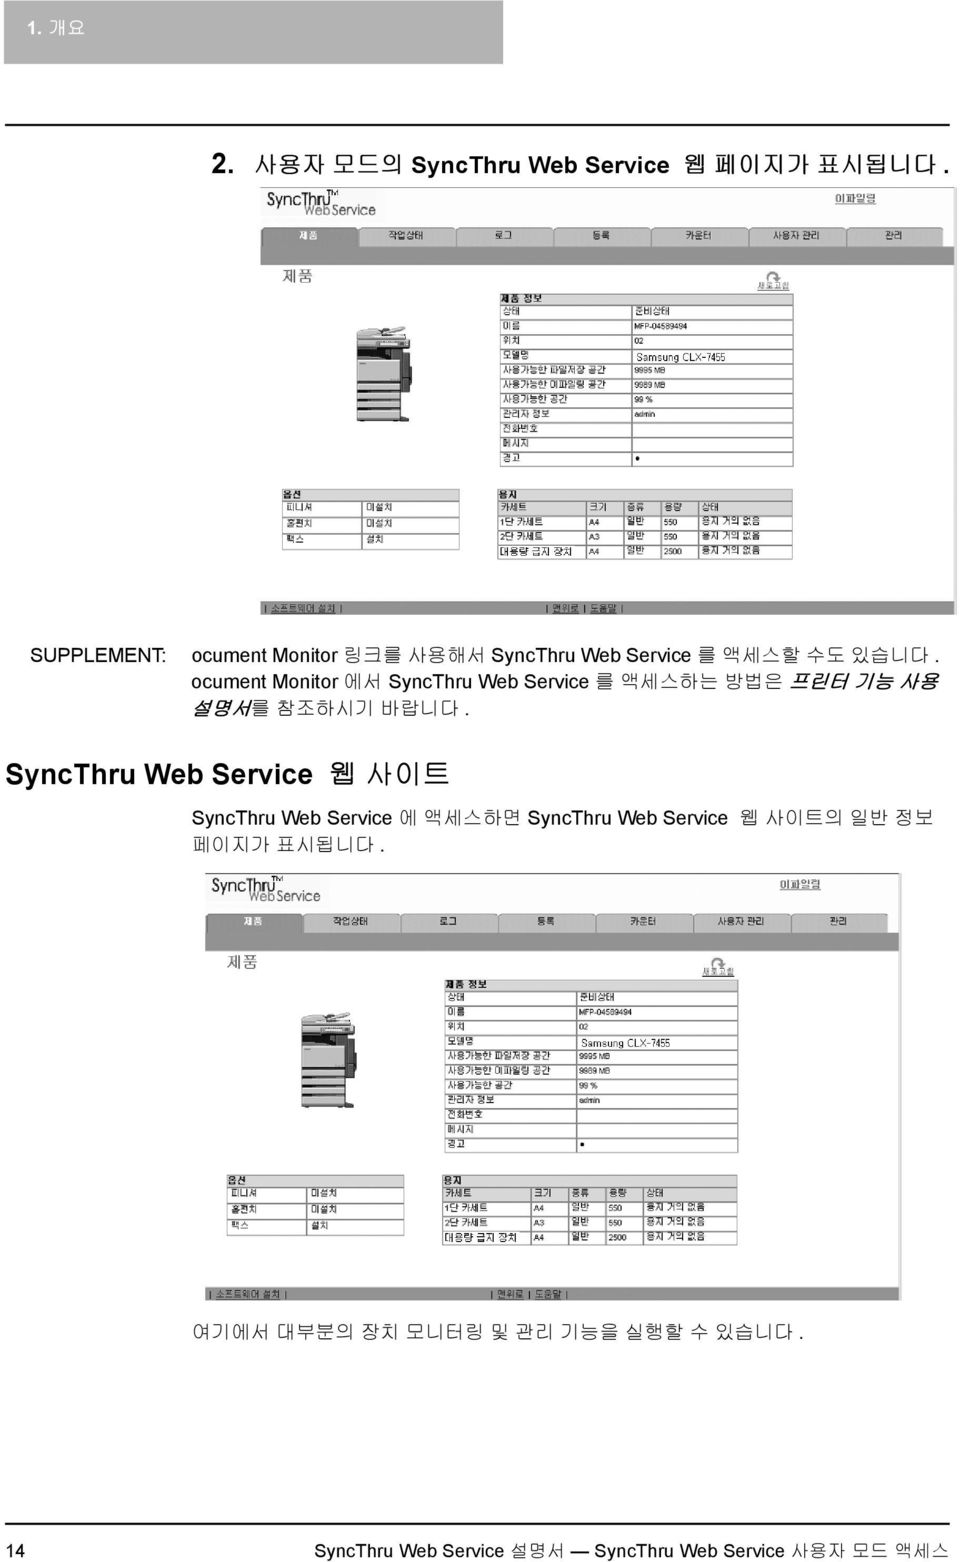 ocument Monitor 에서 SyncThru Web Service 를 액세스하는 방법은 프린터 기능 사용 설명서를 참조하시기 바랍니다.